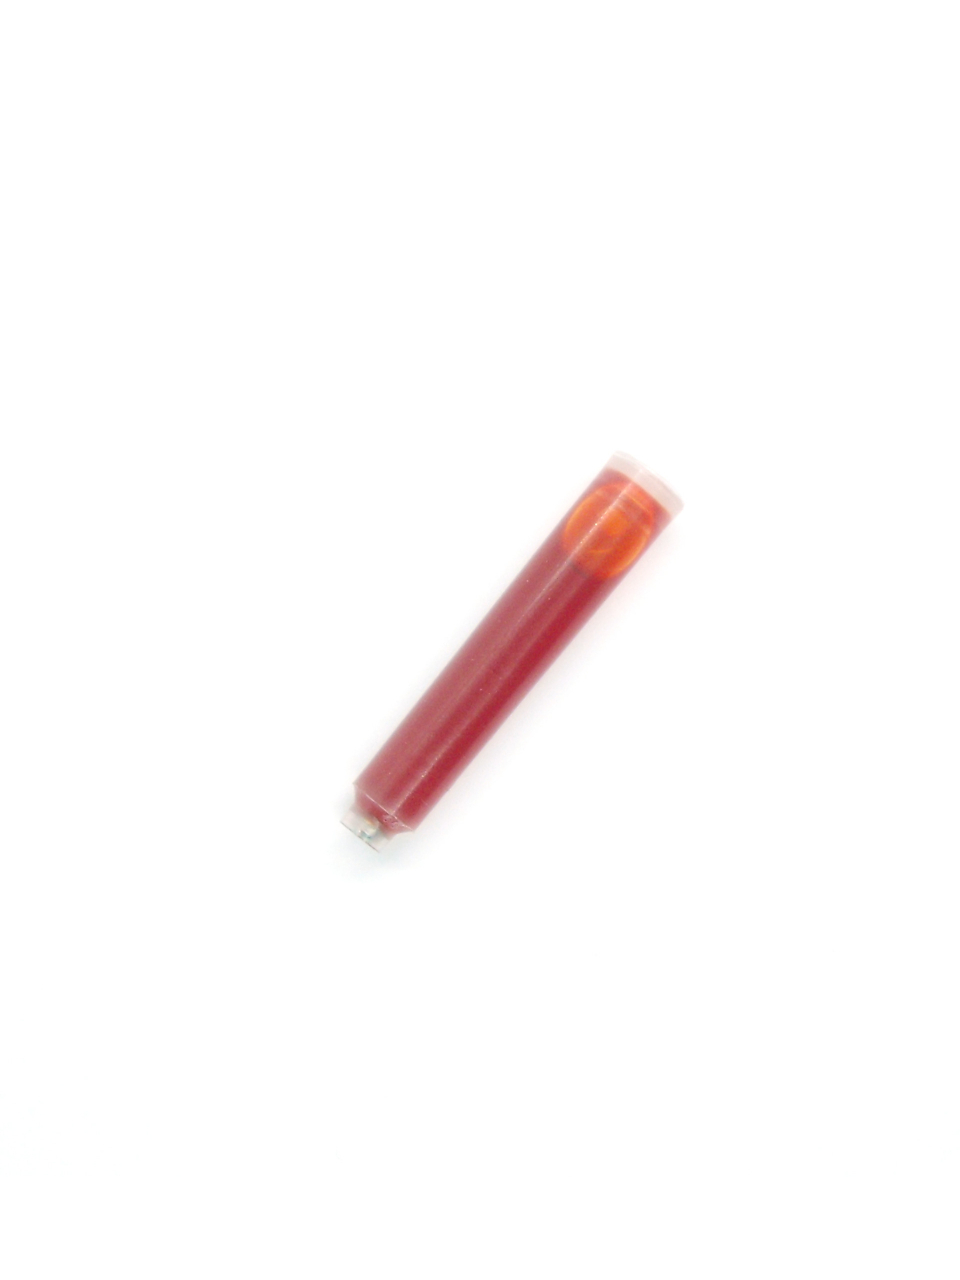 Ink Cartridges For Marlen Fountain Pens (Orange)